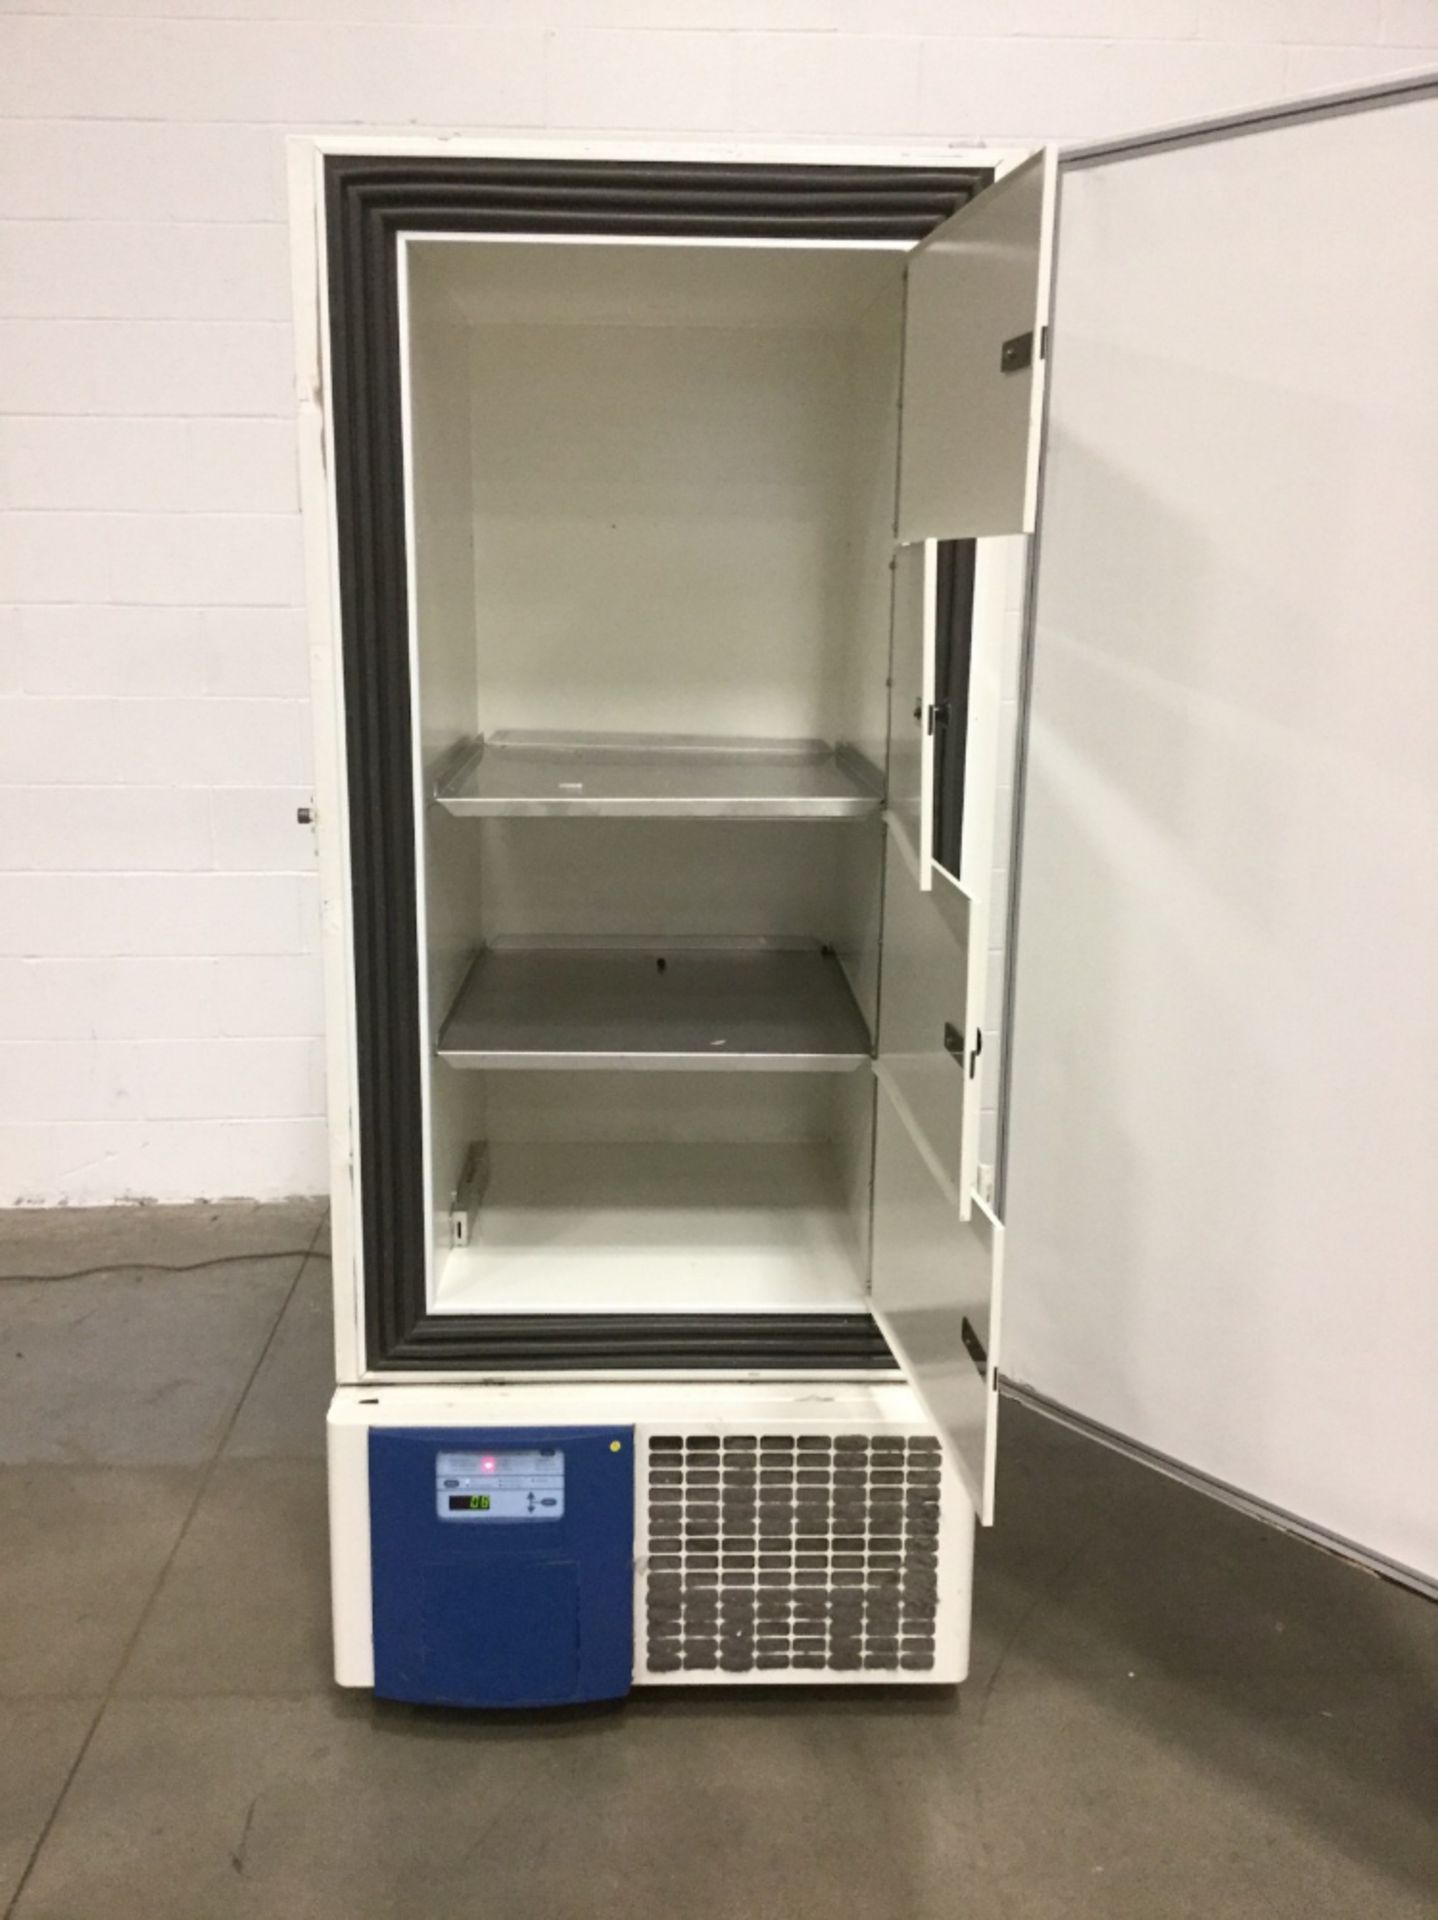 VWR 5704 -80C Laboratory Freezer - Image 3 of 3